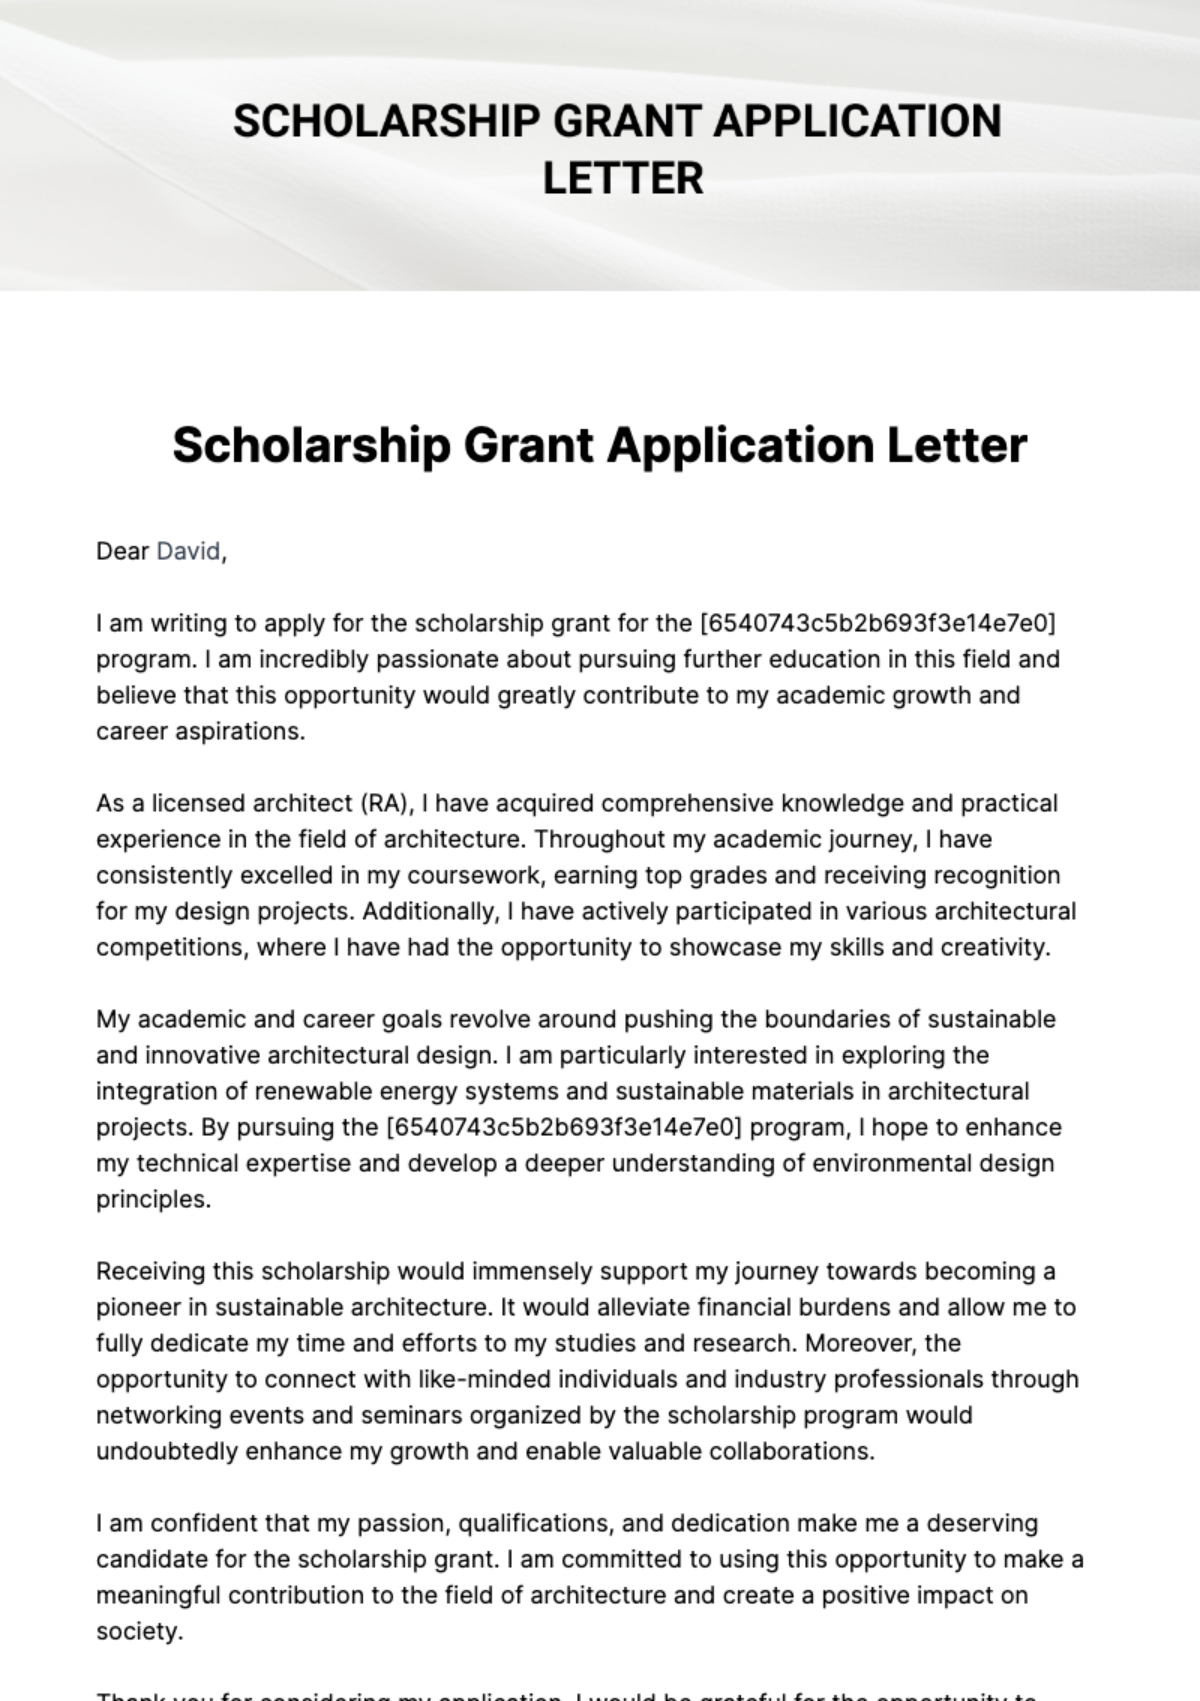 Scholarship Grant Application Letter Template